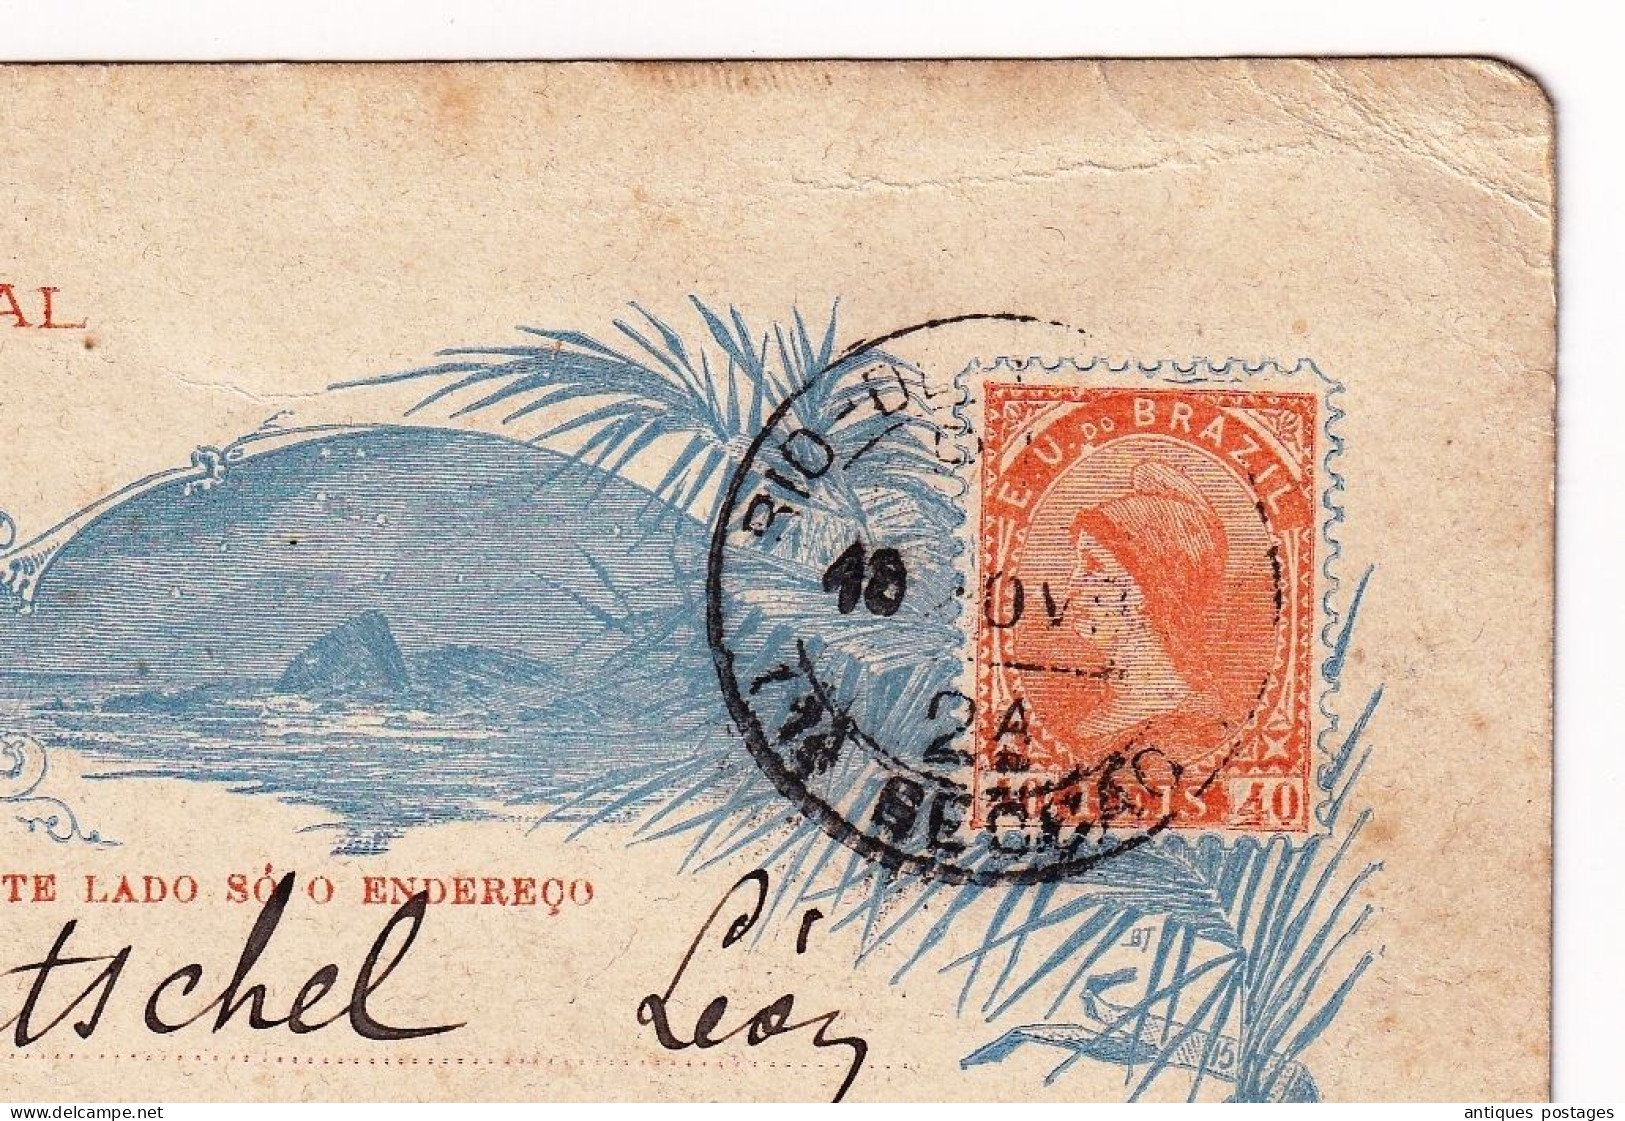 Bilhete Postal 1893 Rio De Janeiro Carte Postale Brésil Brazil Brasil Consulat De France Léon Goetschel - Lettres & Documents